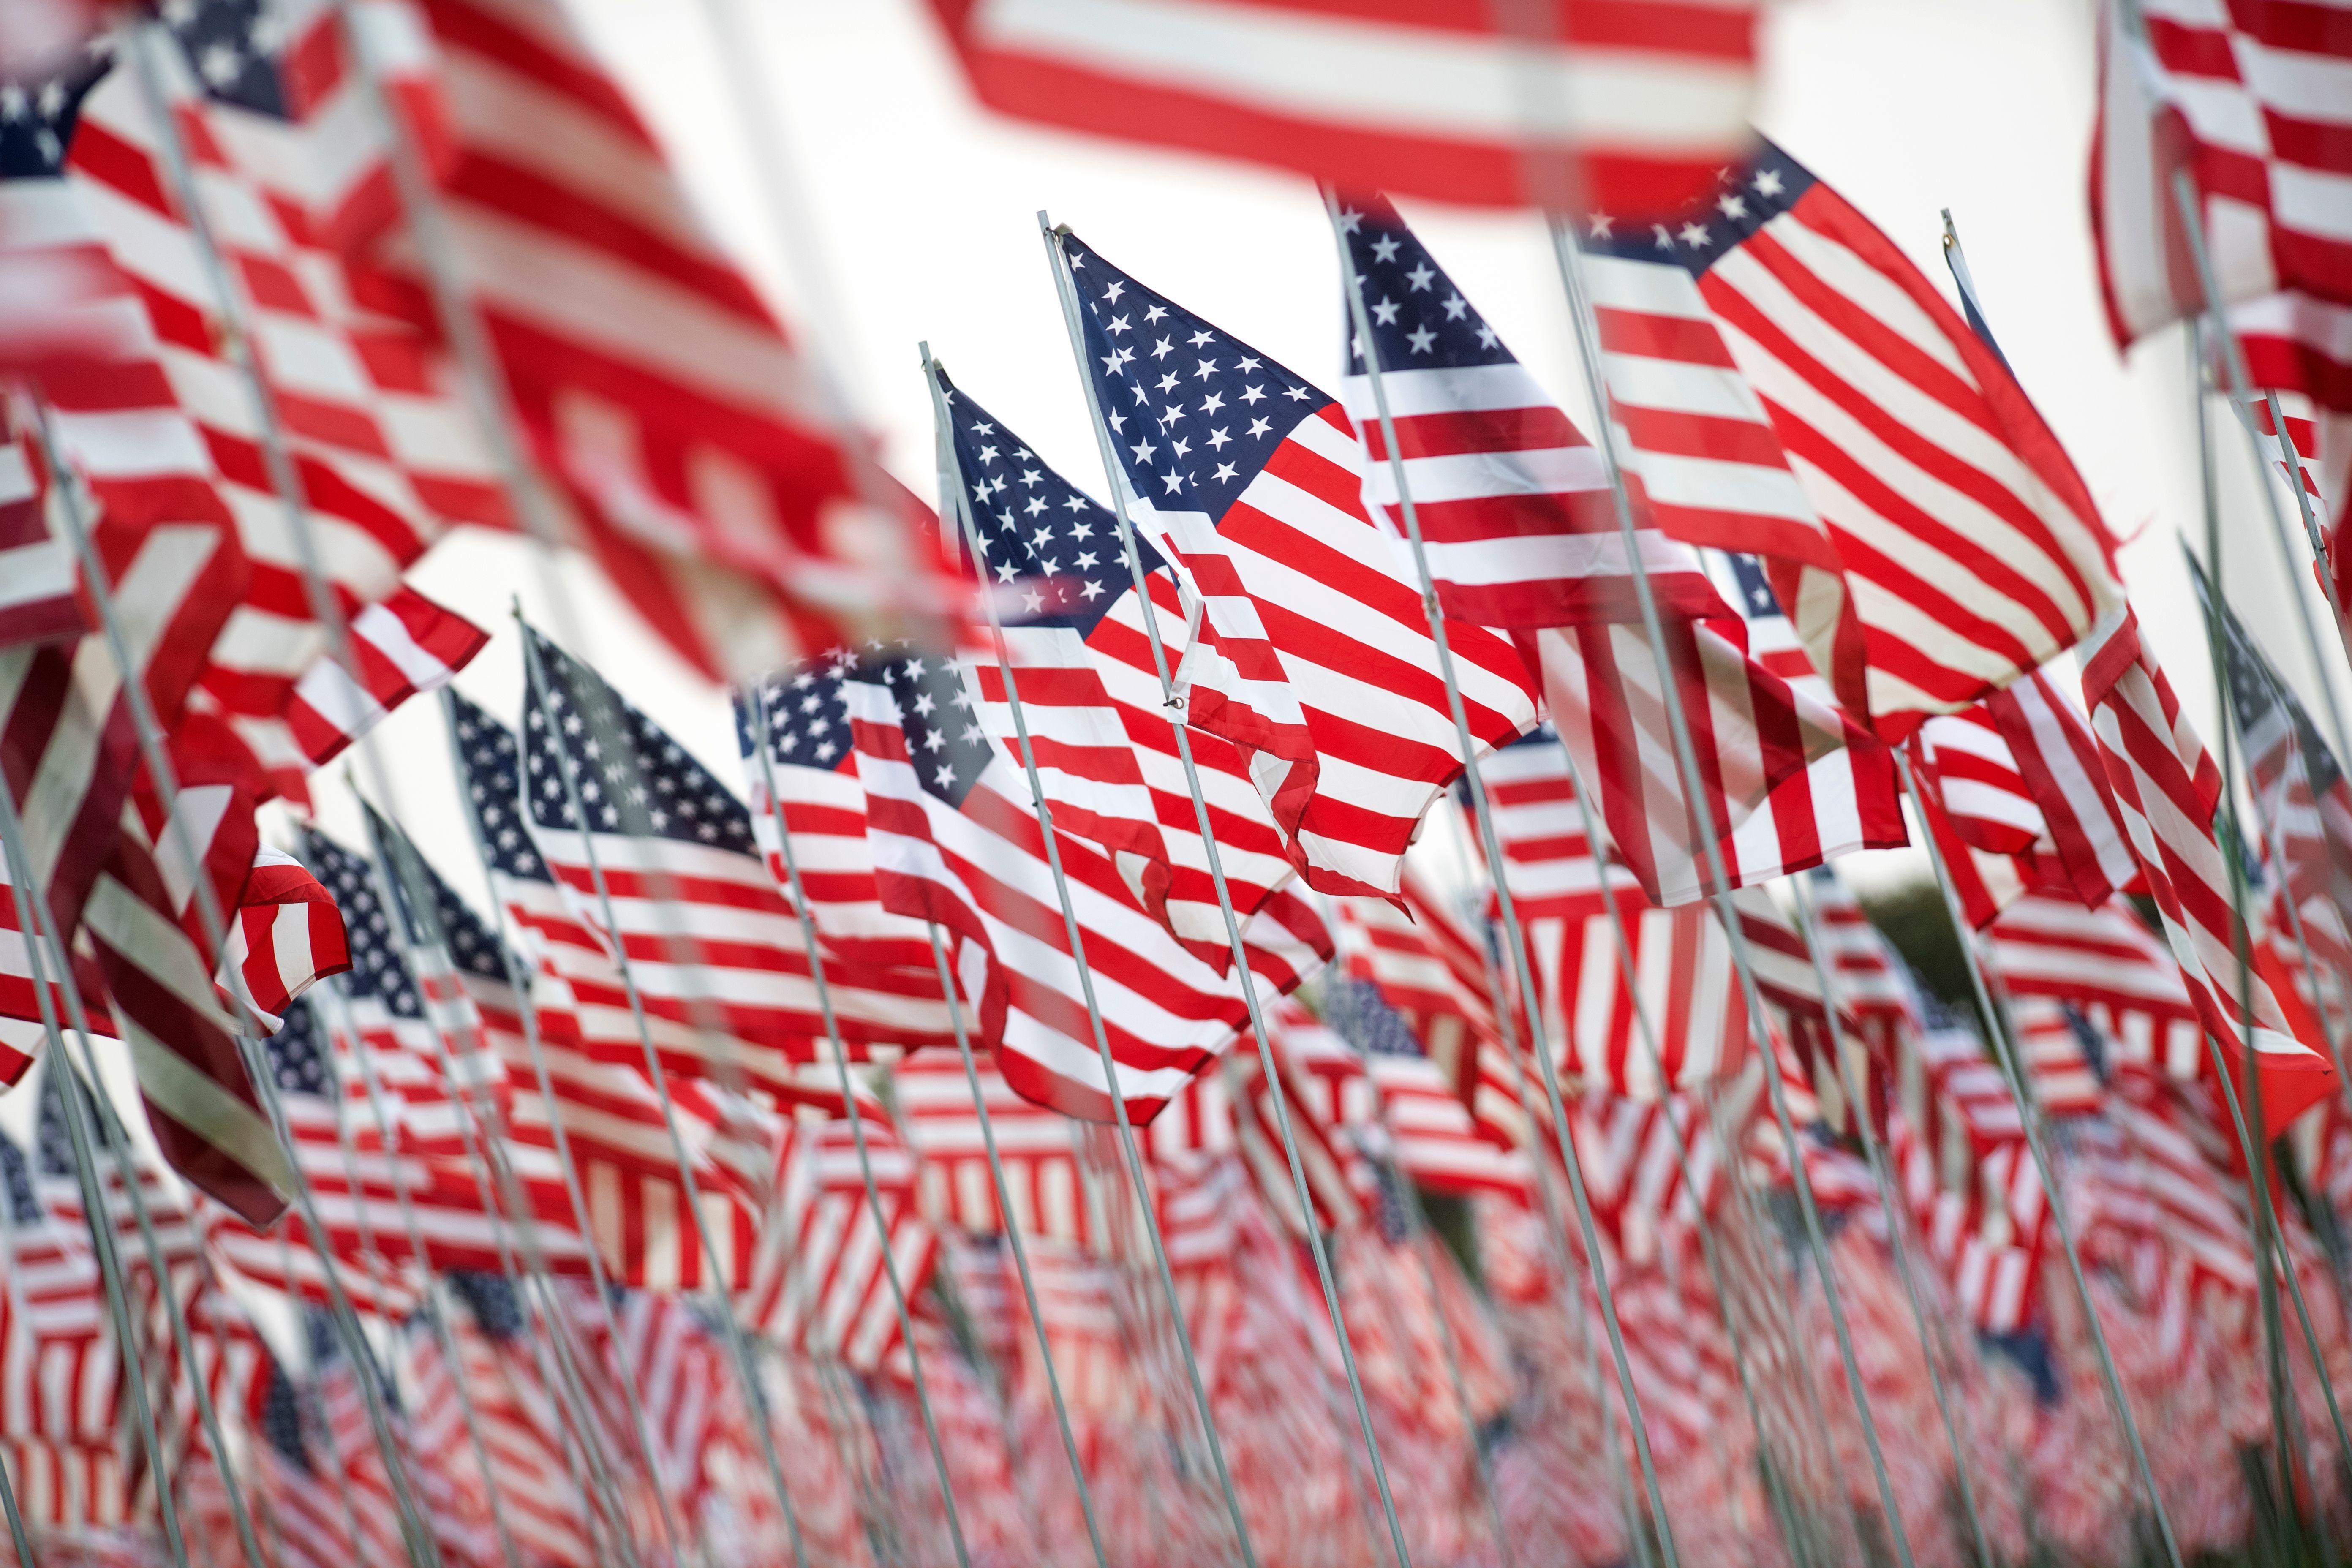 Around 3,000 flags at a 9/11 memorial at Pepperdine University in Malibu, California.